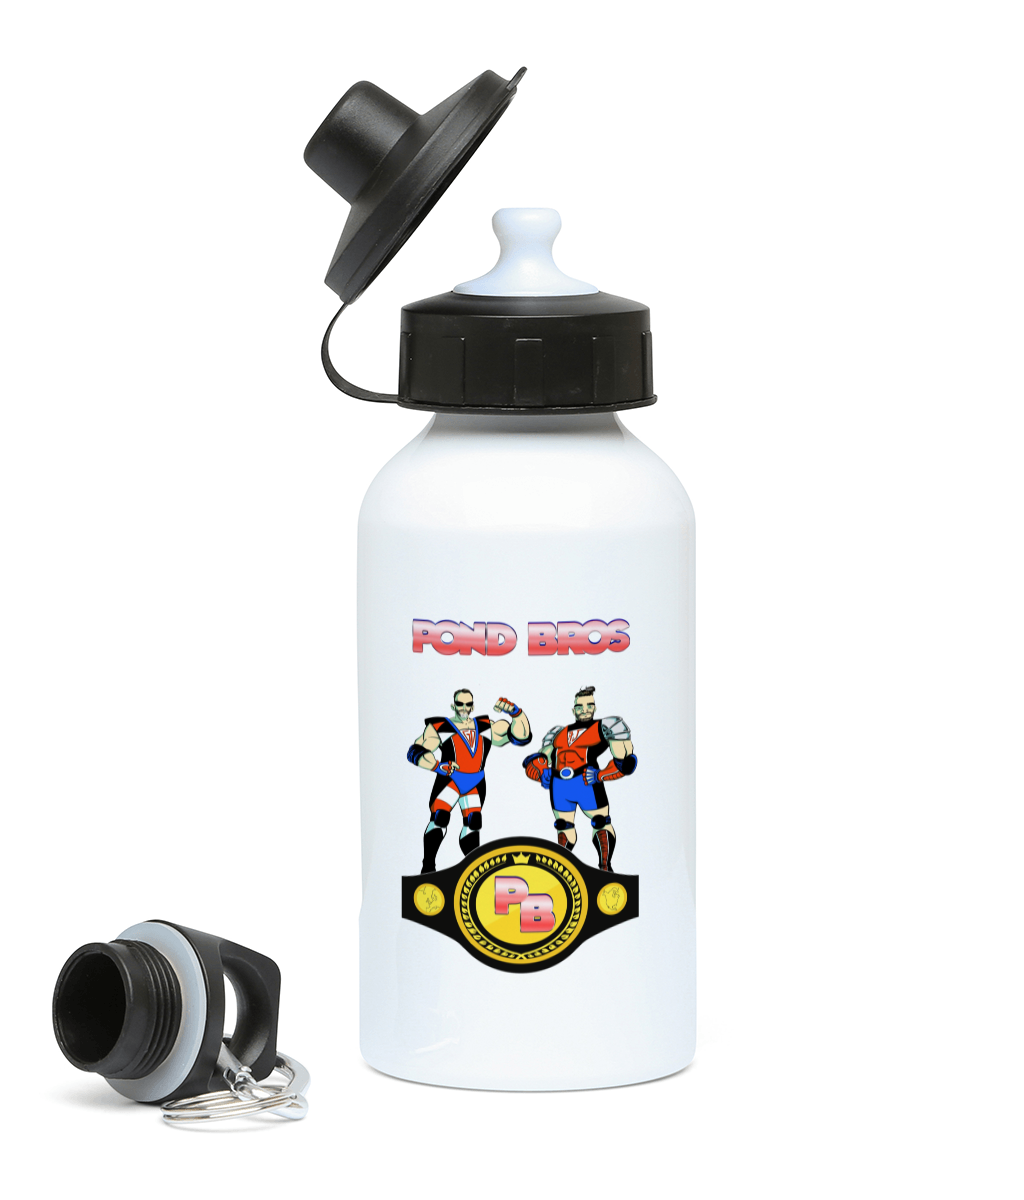 Pond Bros Promo Water Bottle 400ml